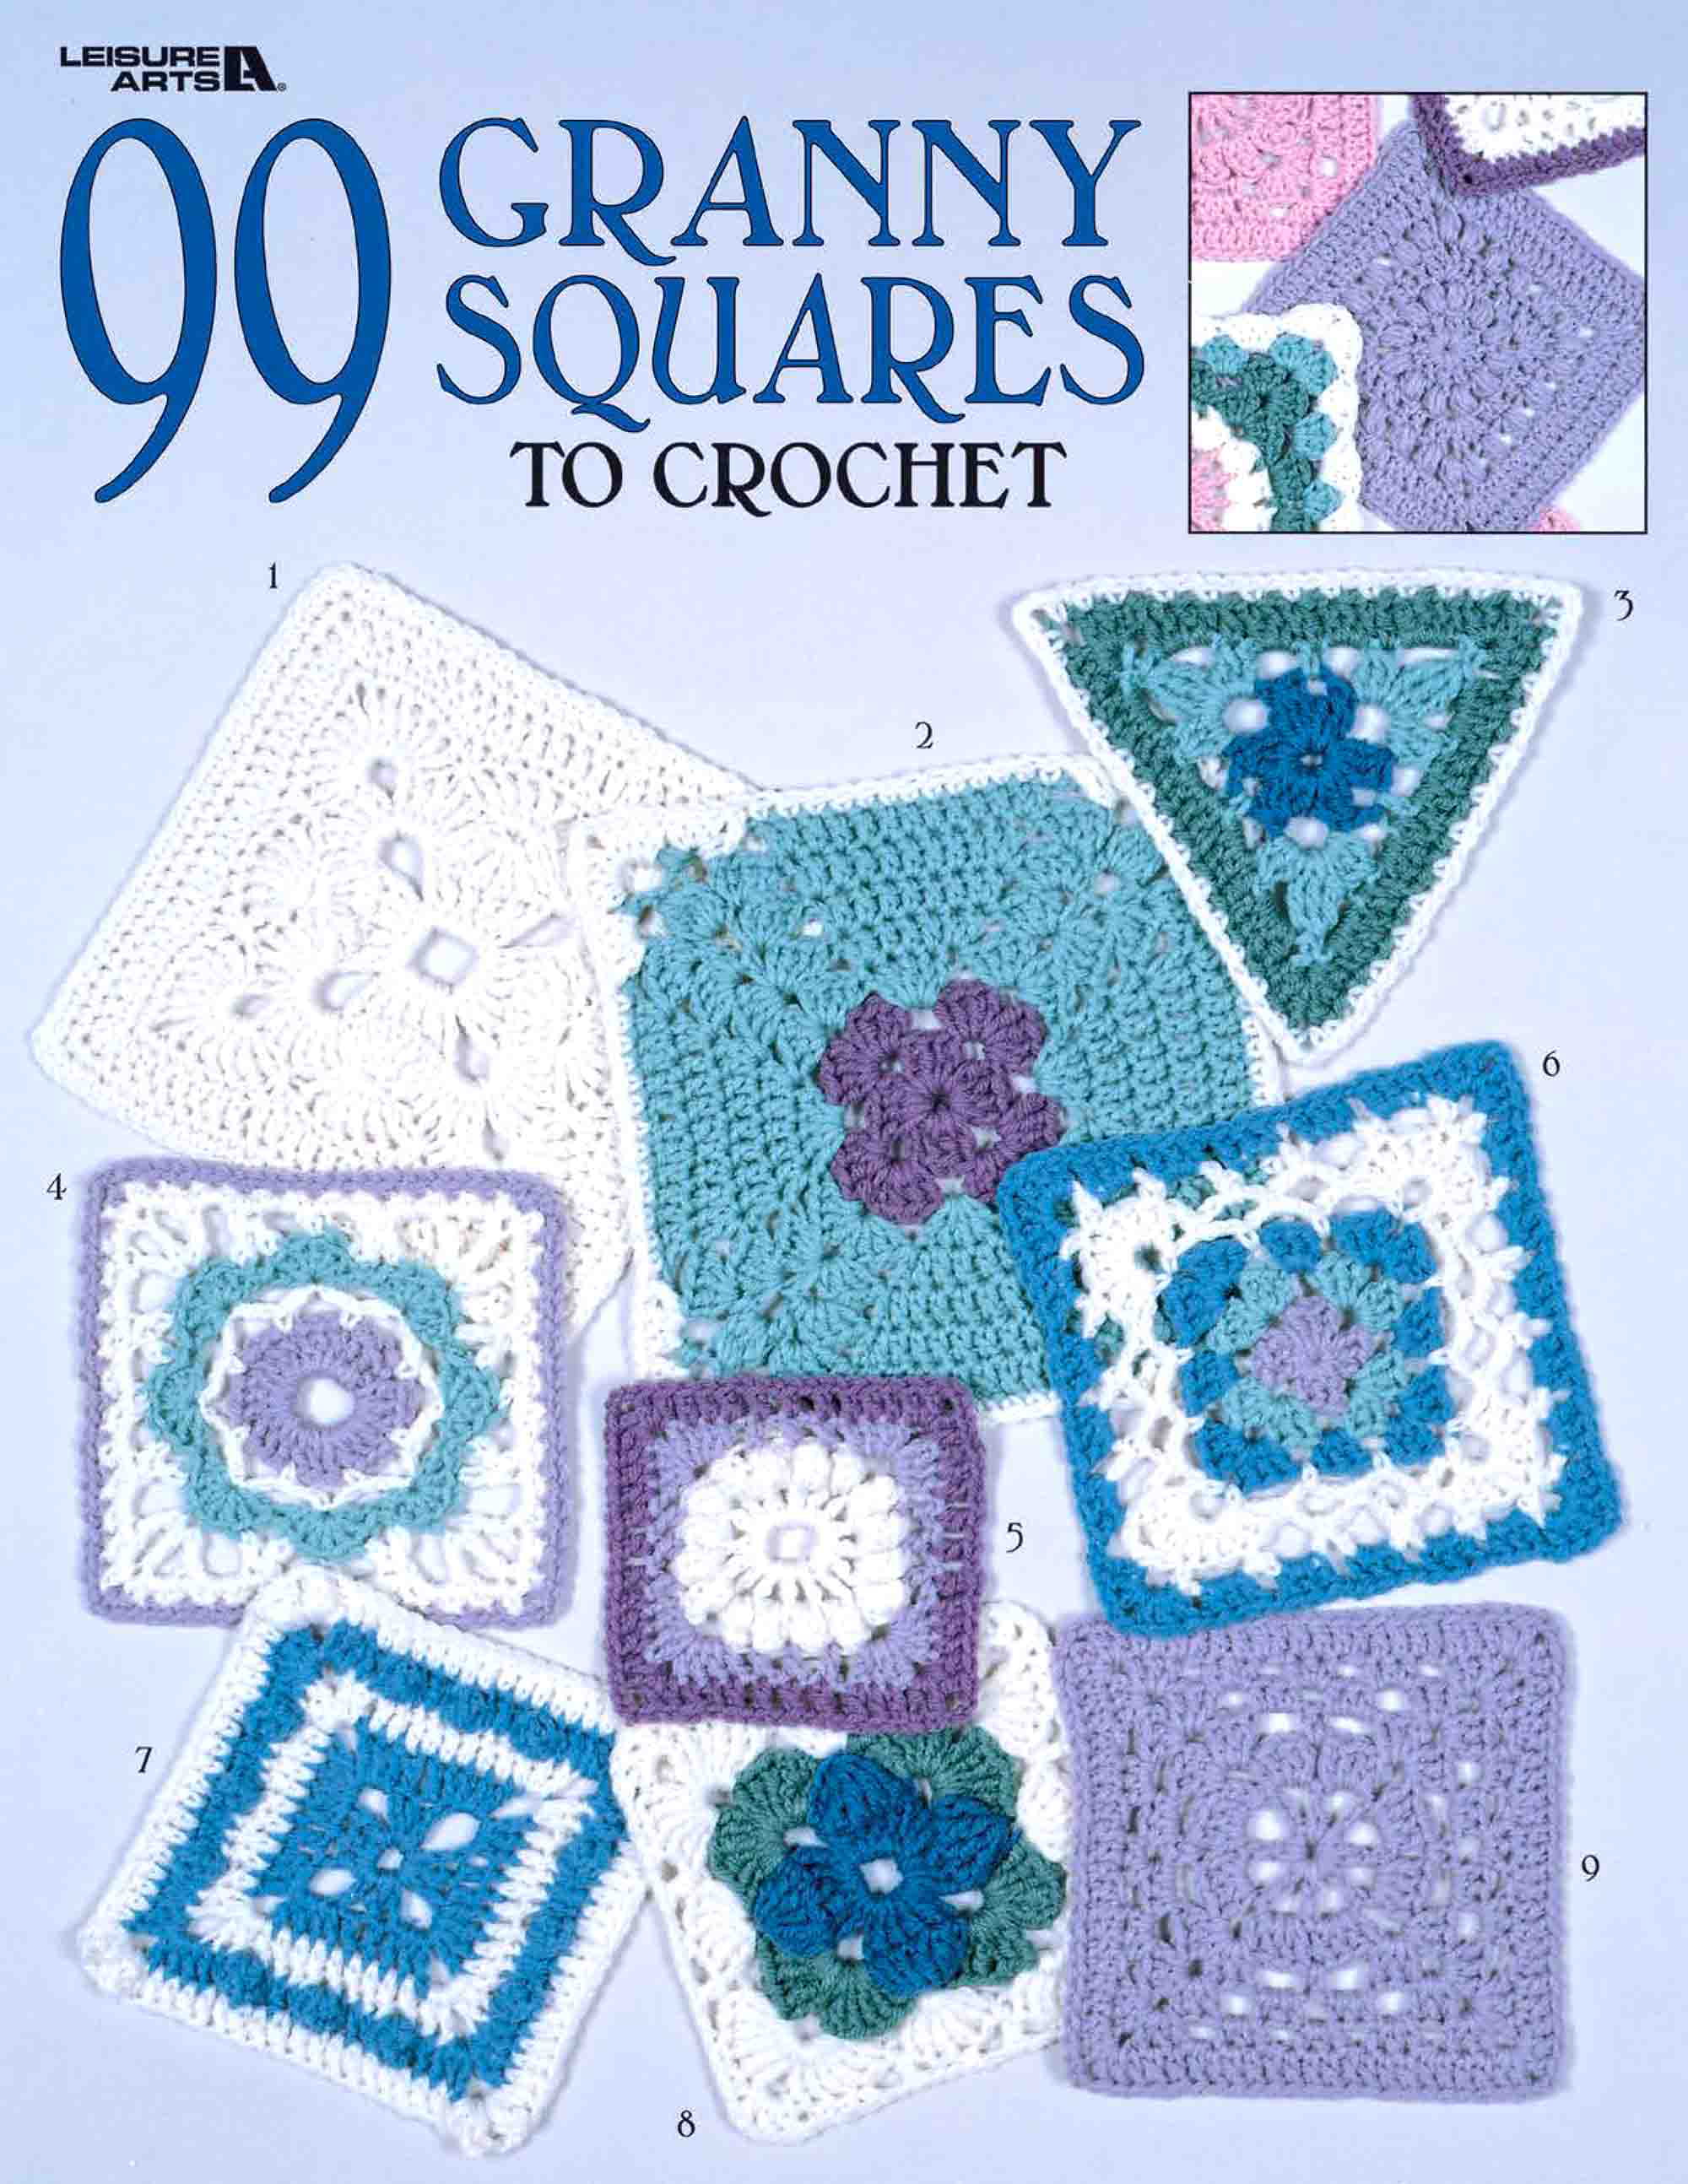 The Big Book of Granny Squares - #Crochet Book Giveaway!